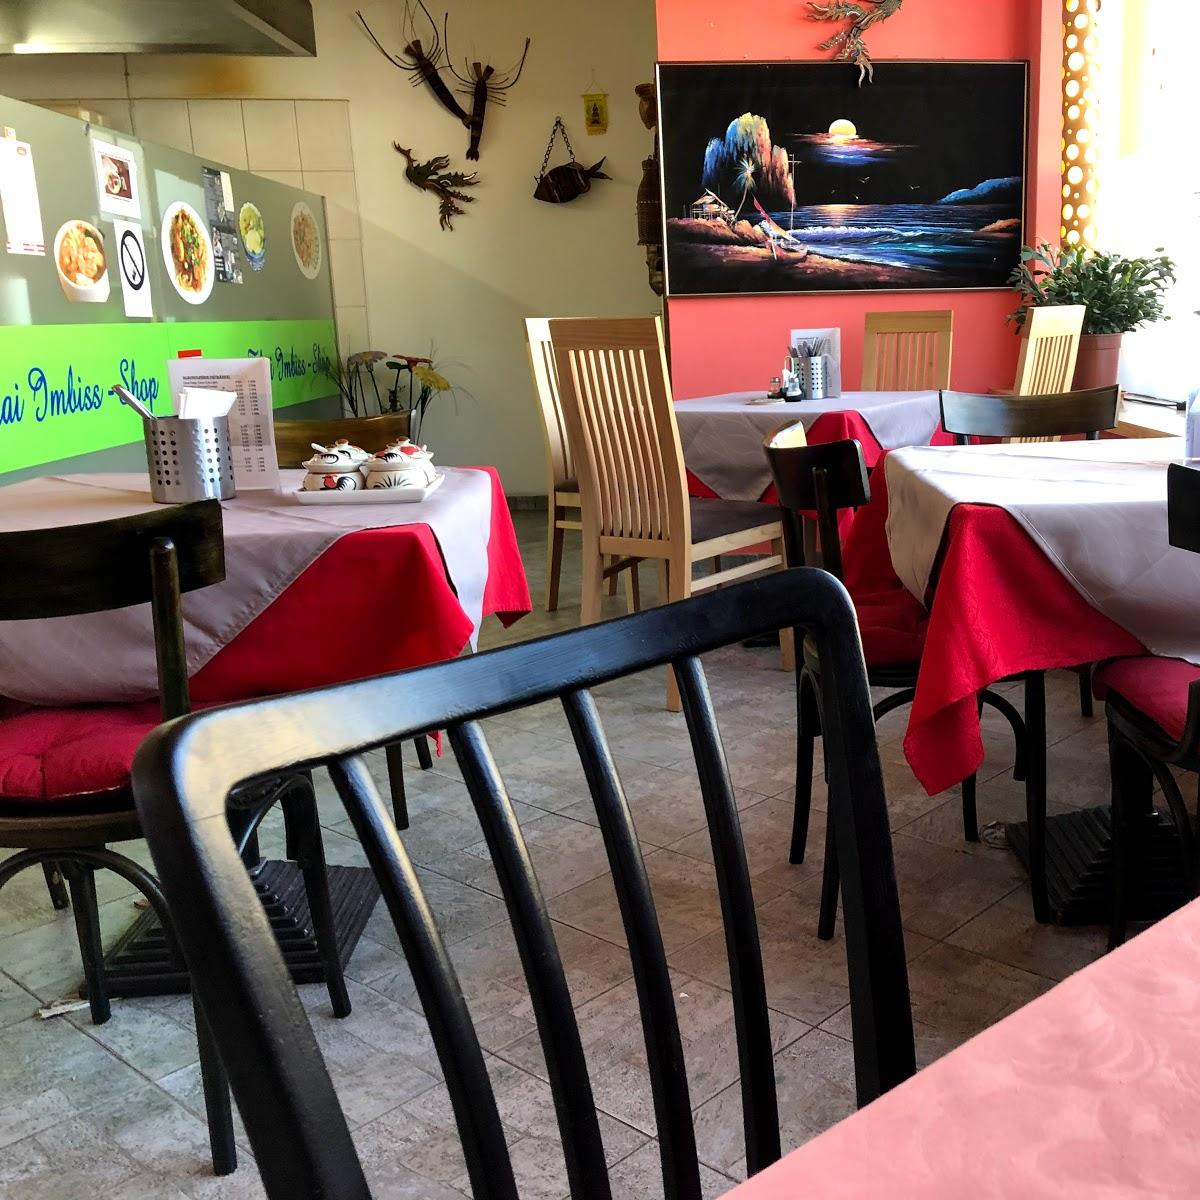 Restaurant "Panthip Thai Imbiss" in Lenzing